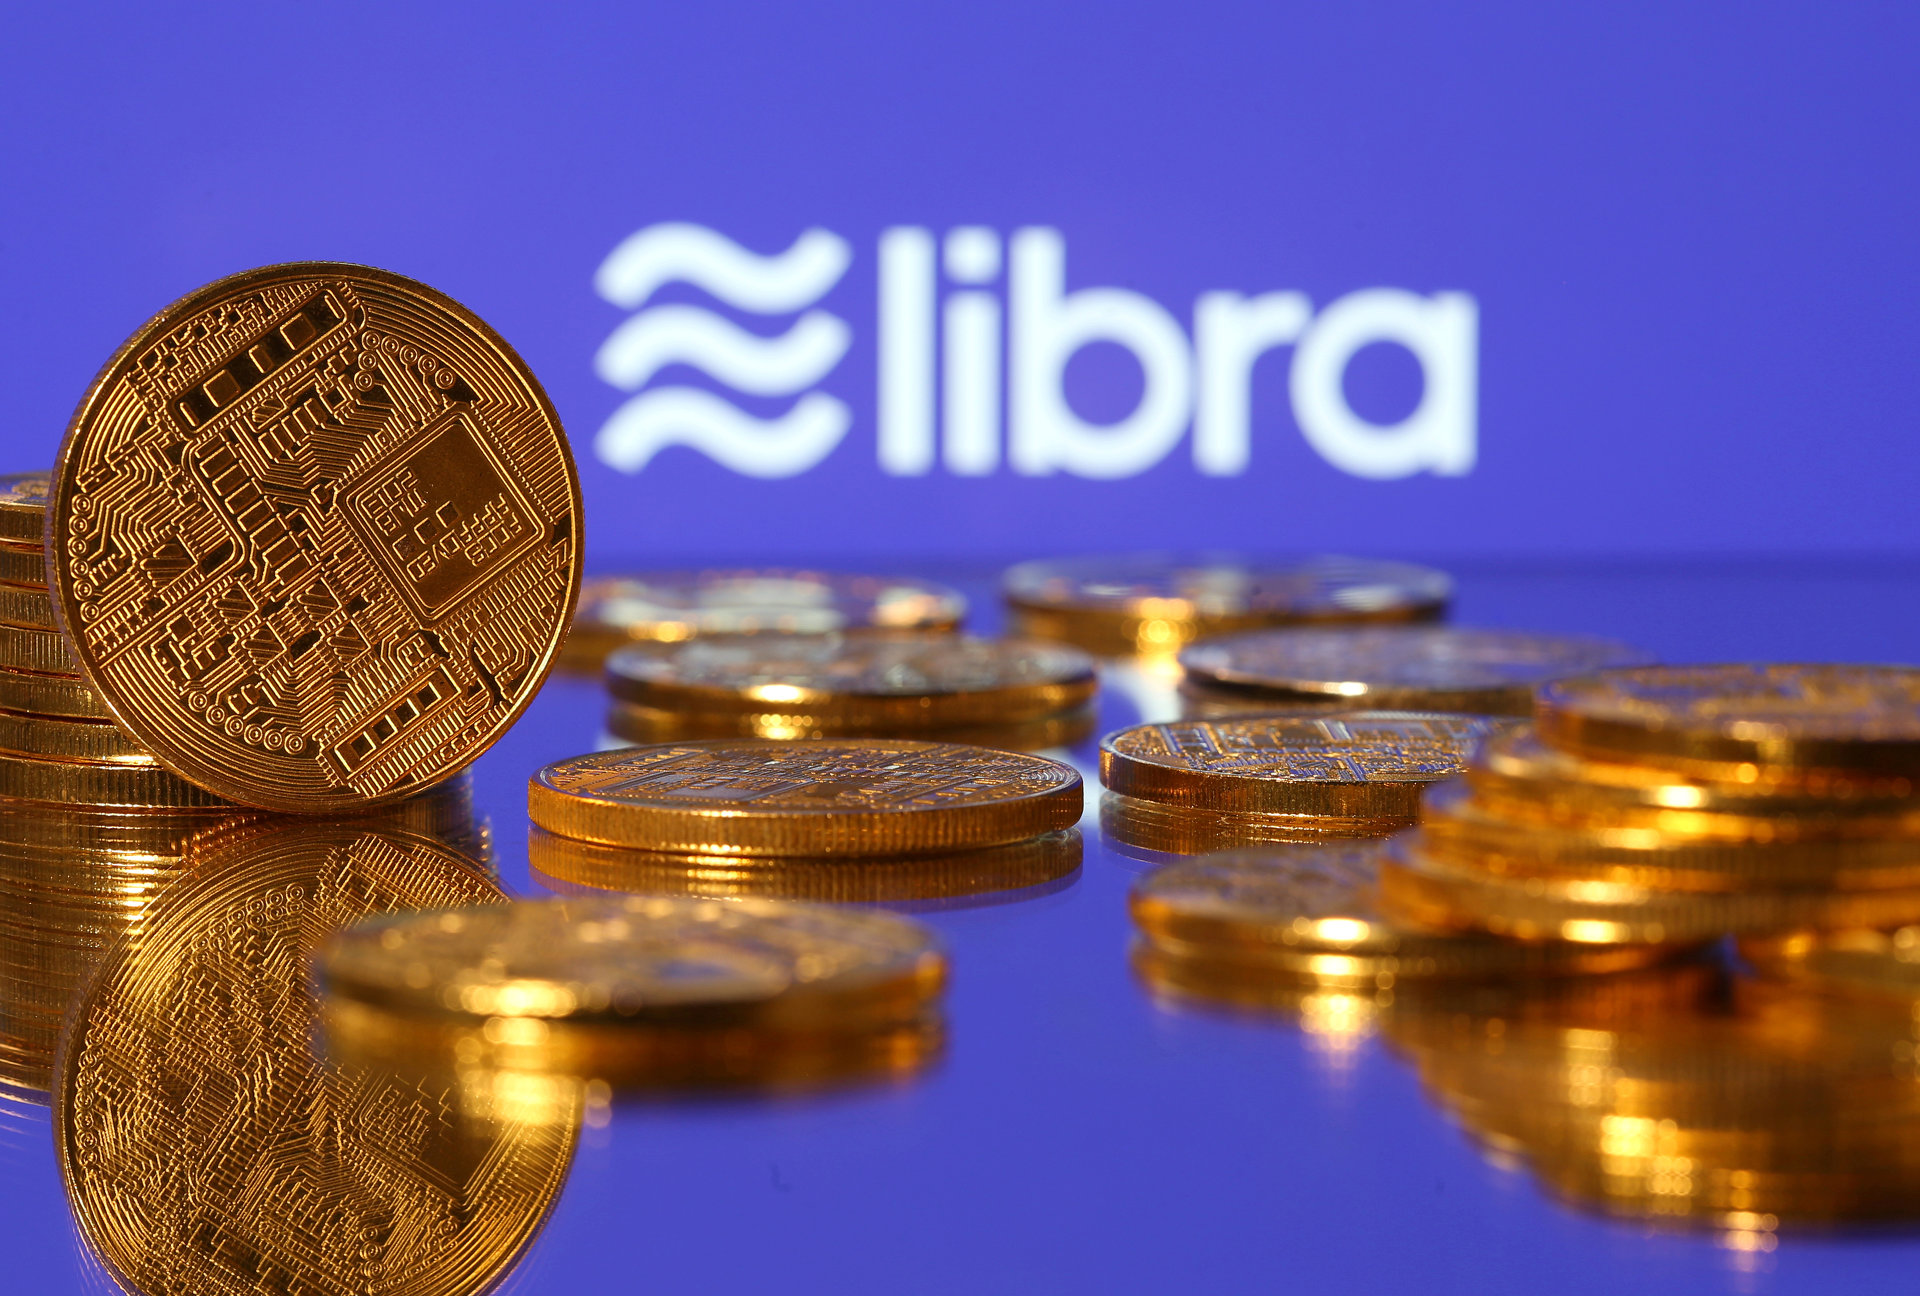 FacebookのLibraが、単一通貨のステーブルコインに方針転換